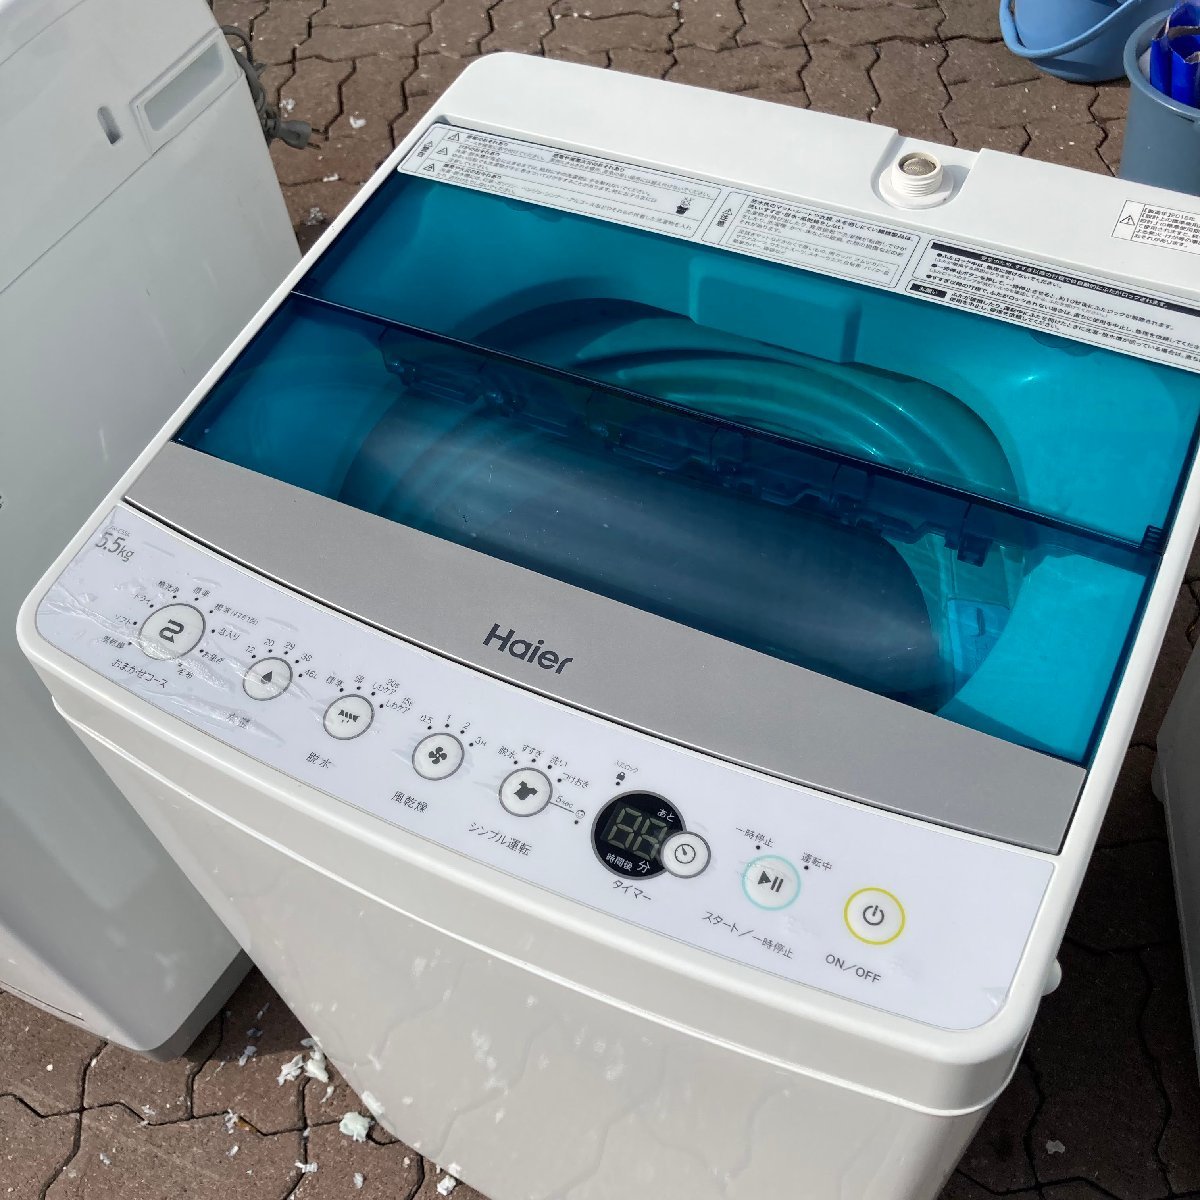 愛用 全自動洗濯機 札幌市内送料無料○Haier○ハイアール JW-C55A 地下